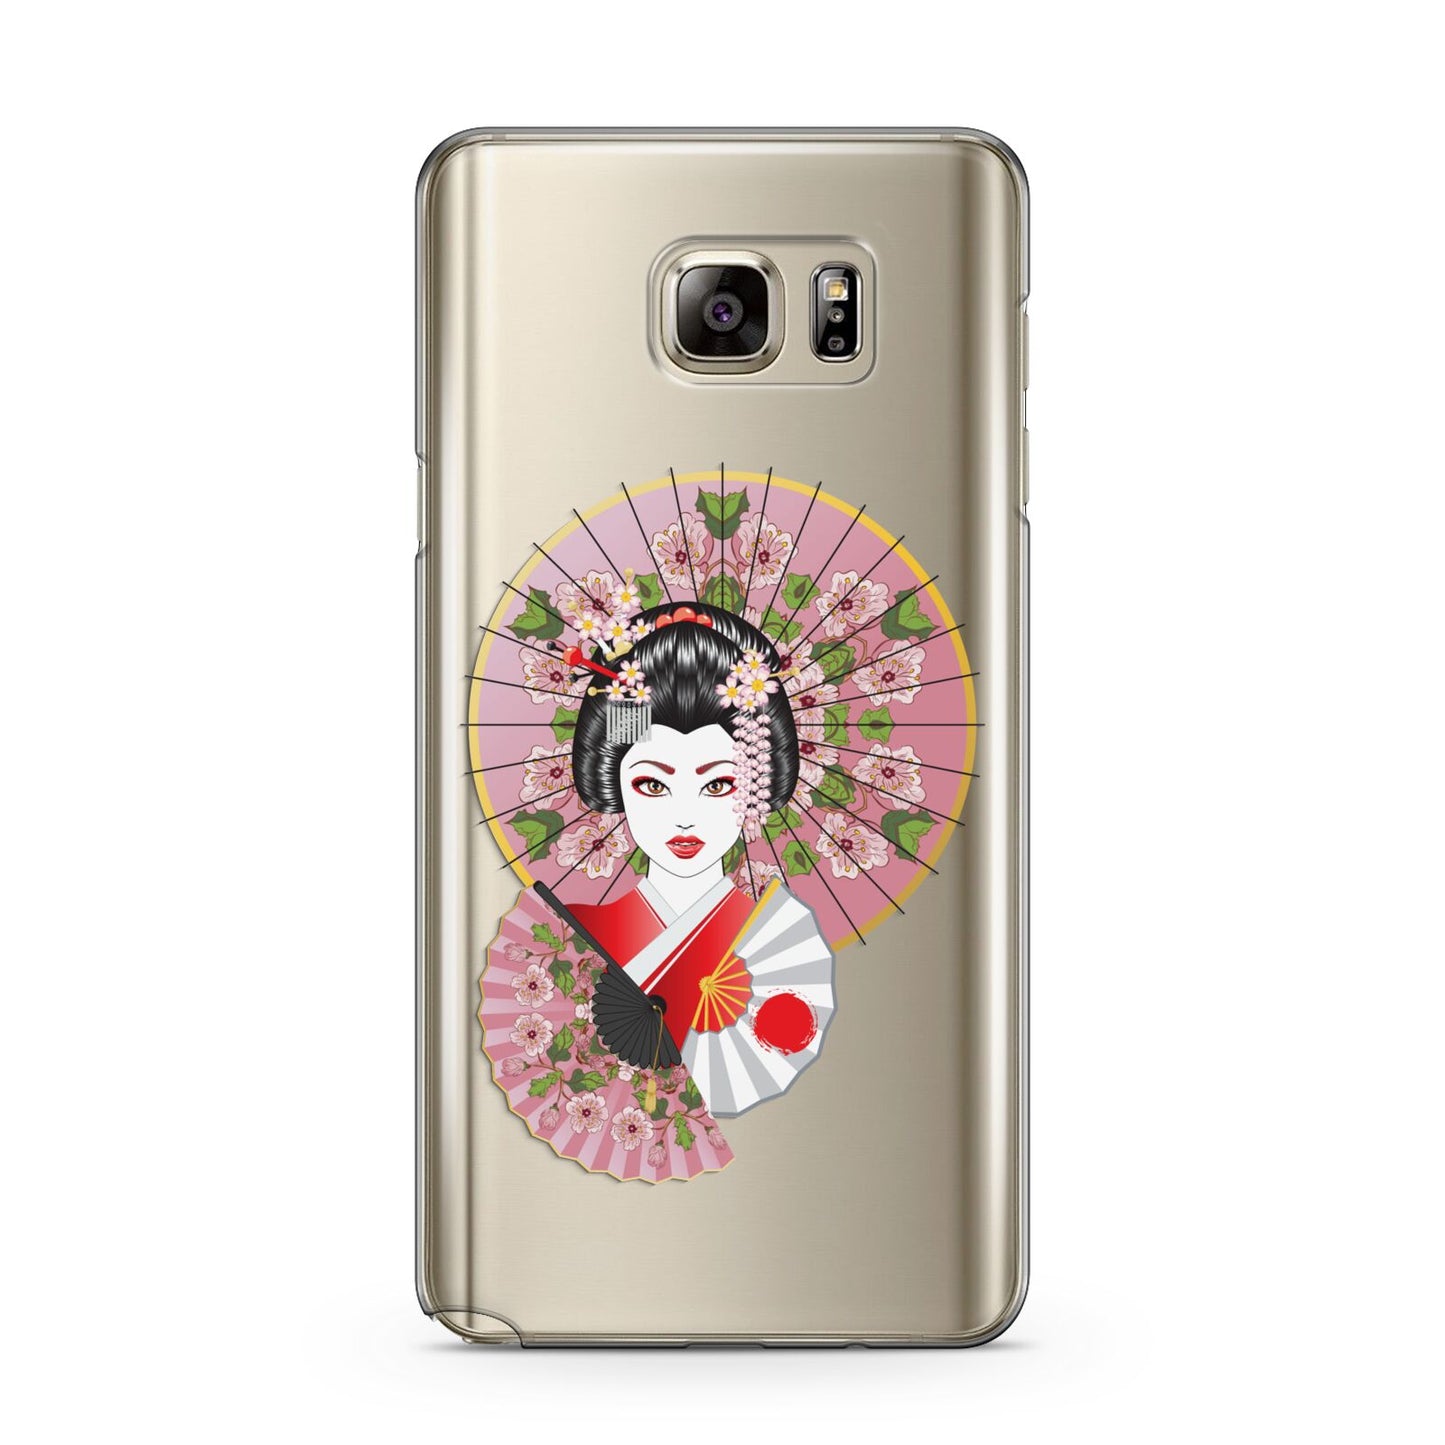 Geisha Girl Samsung Galaxy Note 5 Case